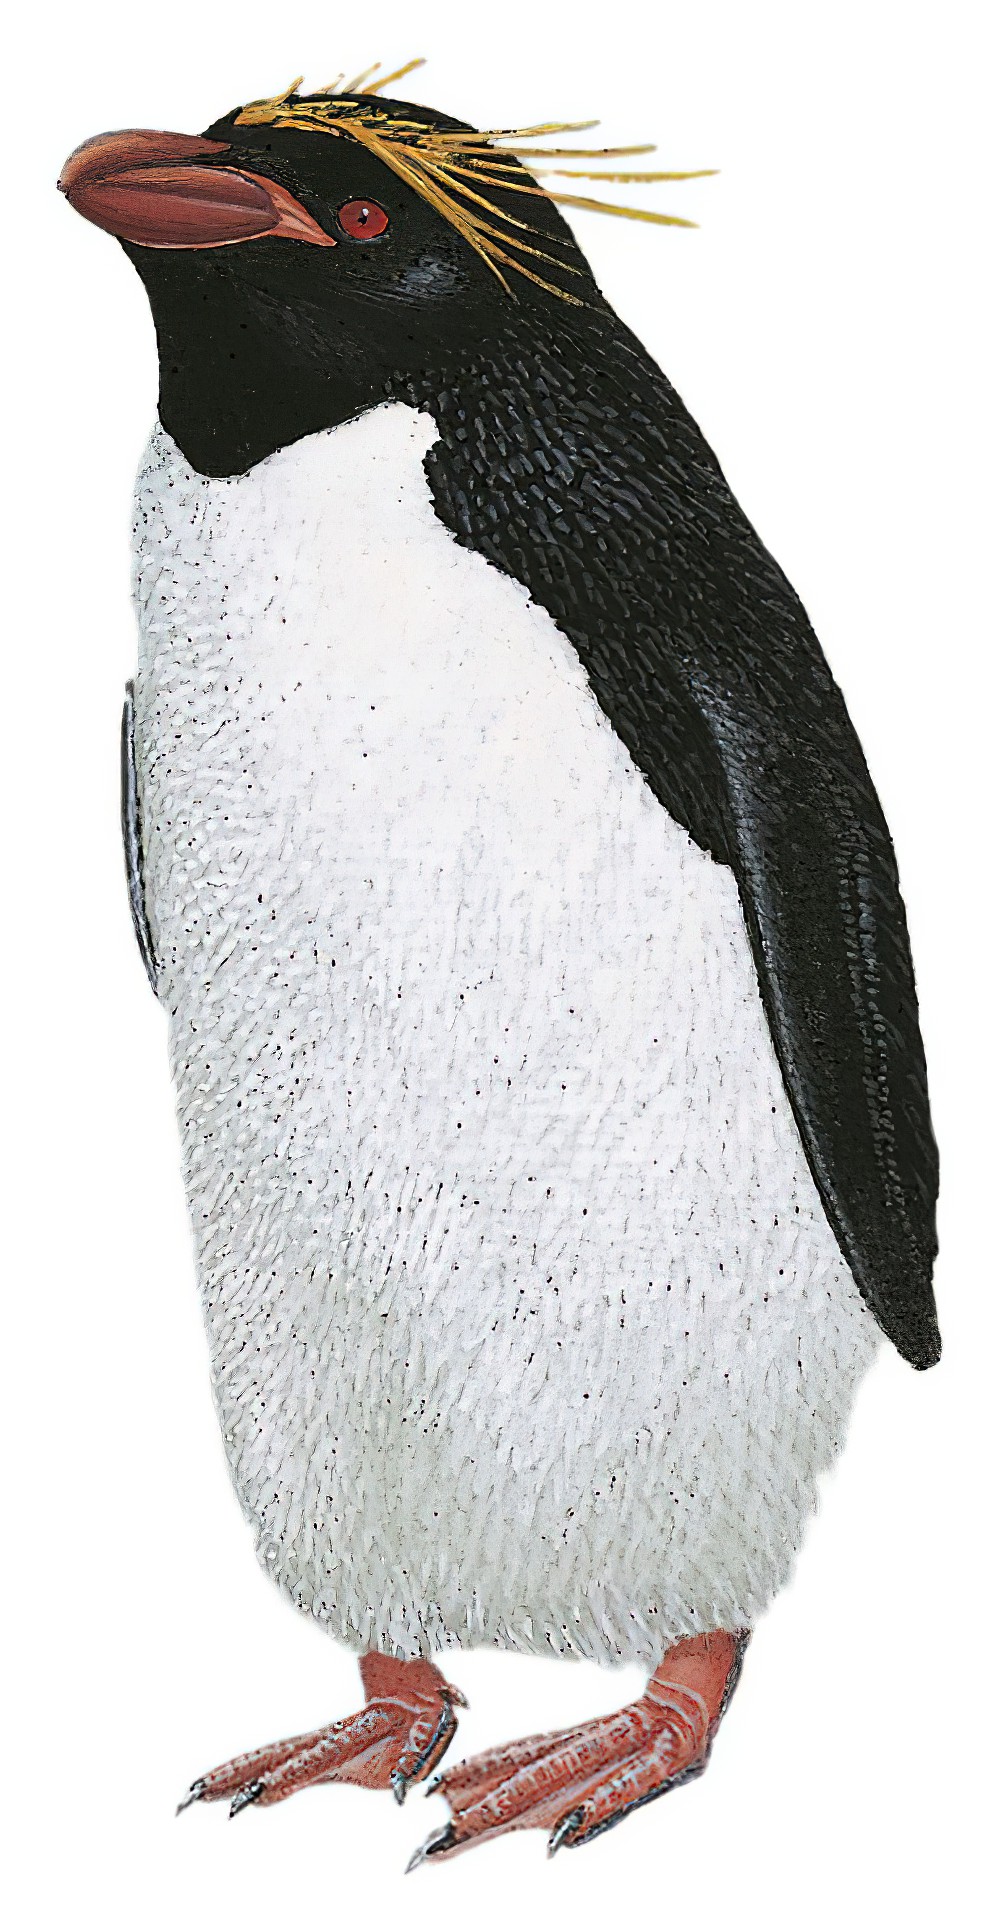 Macaroni Penguin / Eudyptes chrysolophus